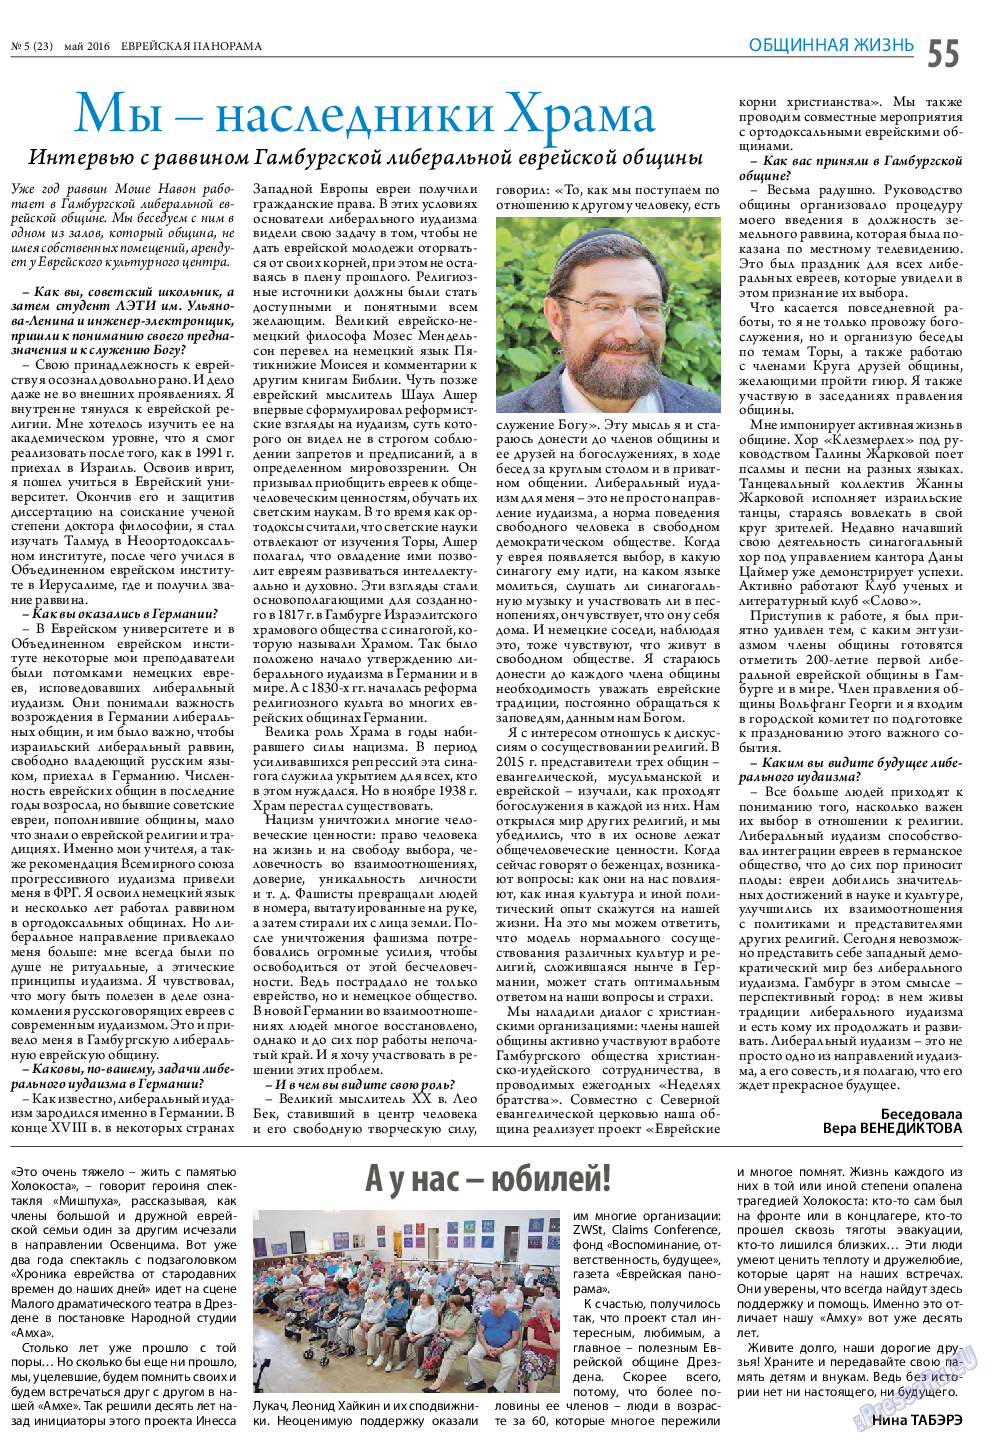 Еврейская панорама, газета. 2016 №5 стр.55